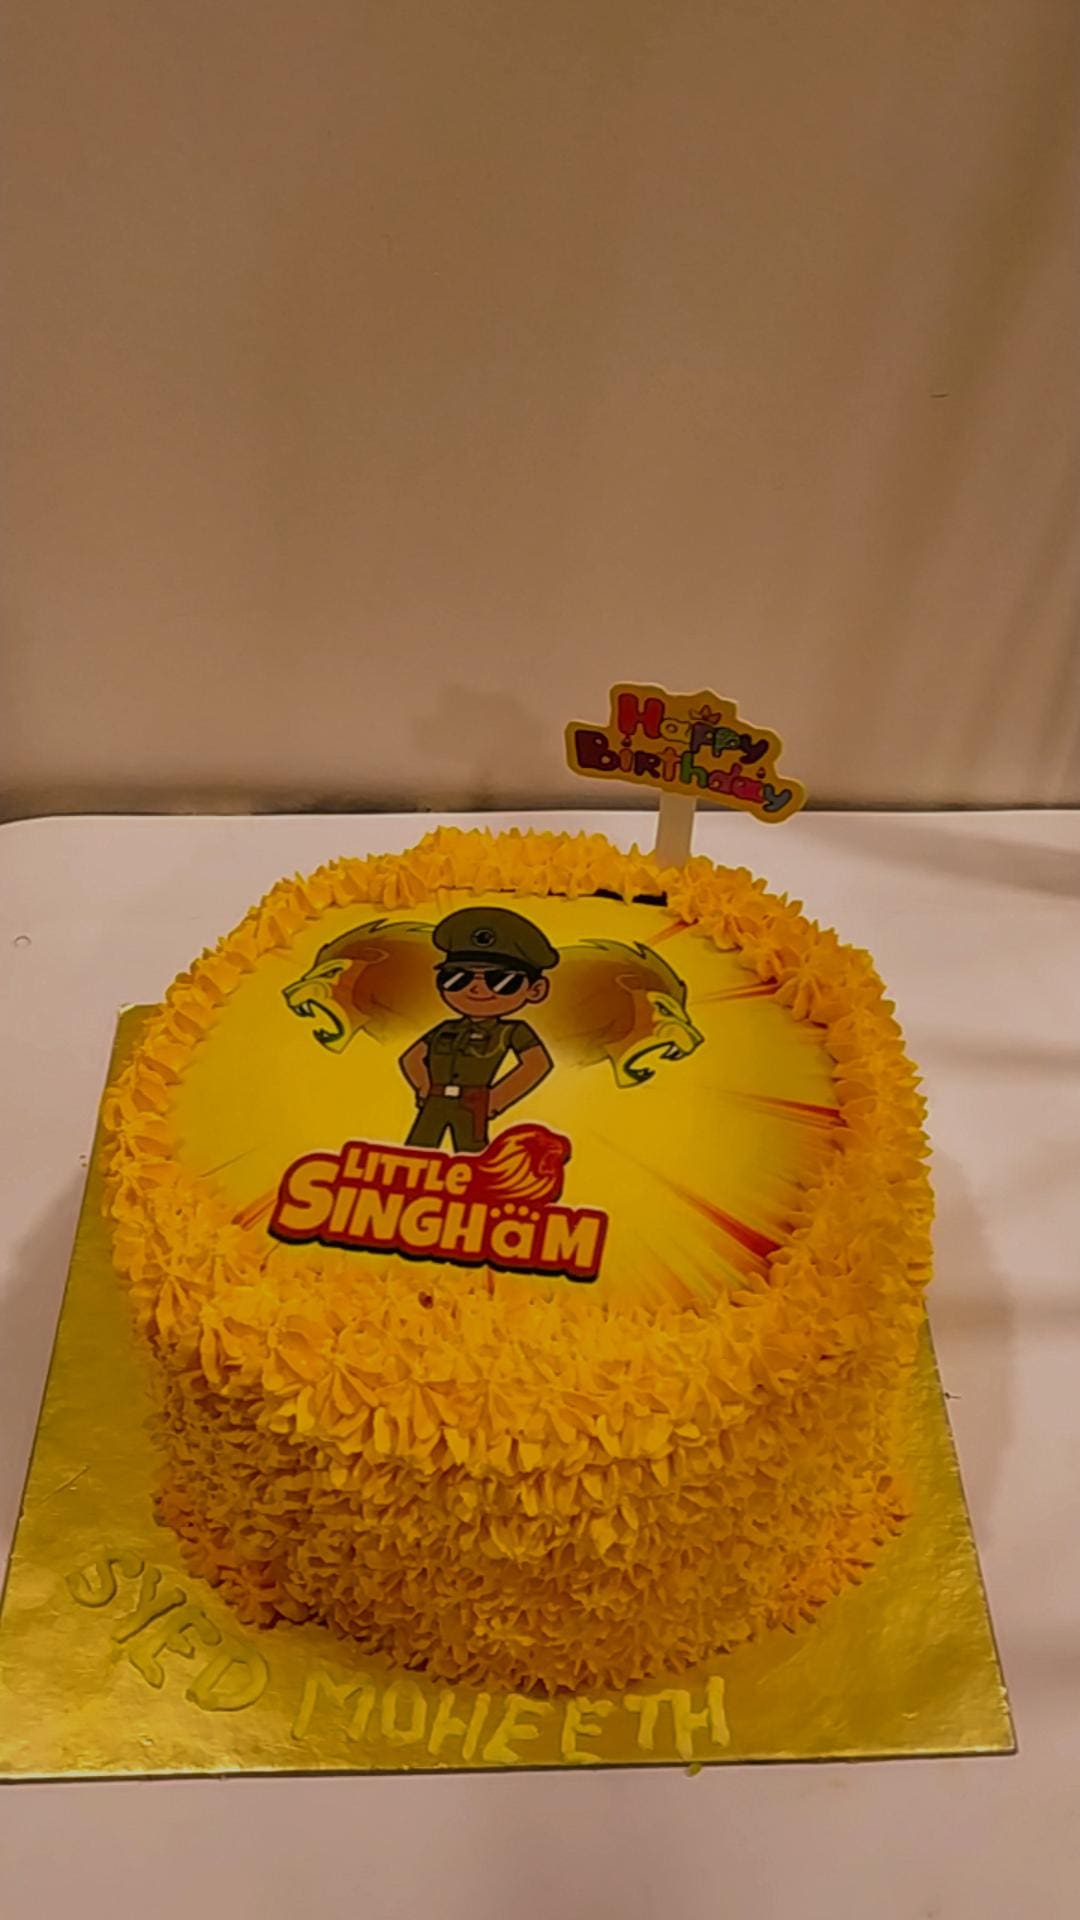 Singham Theme Cake Designs, Images, Price Near Me